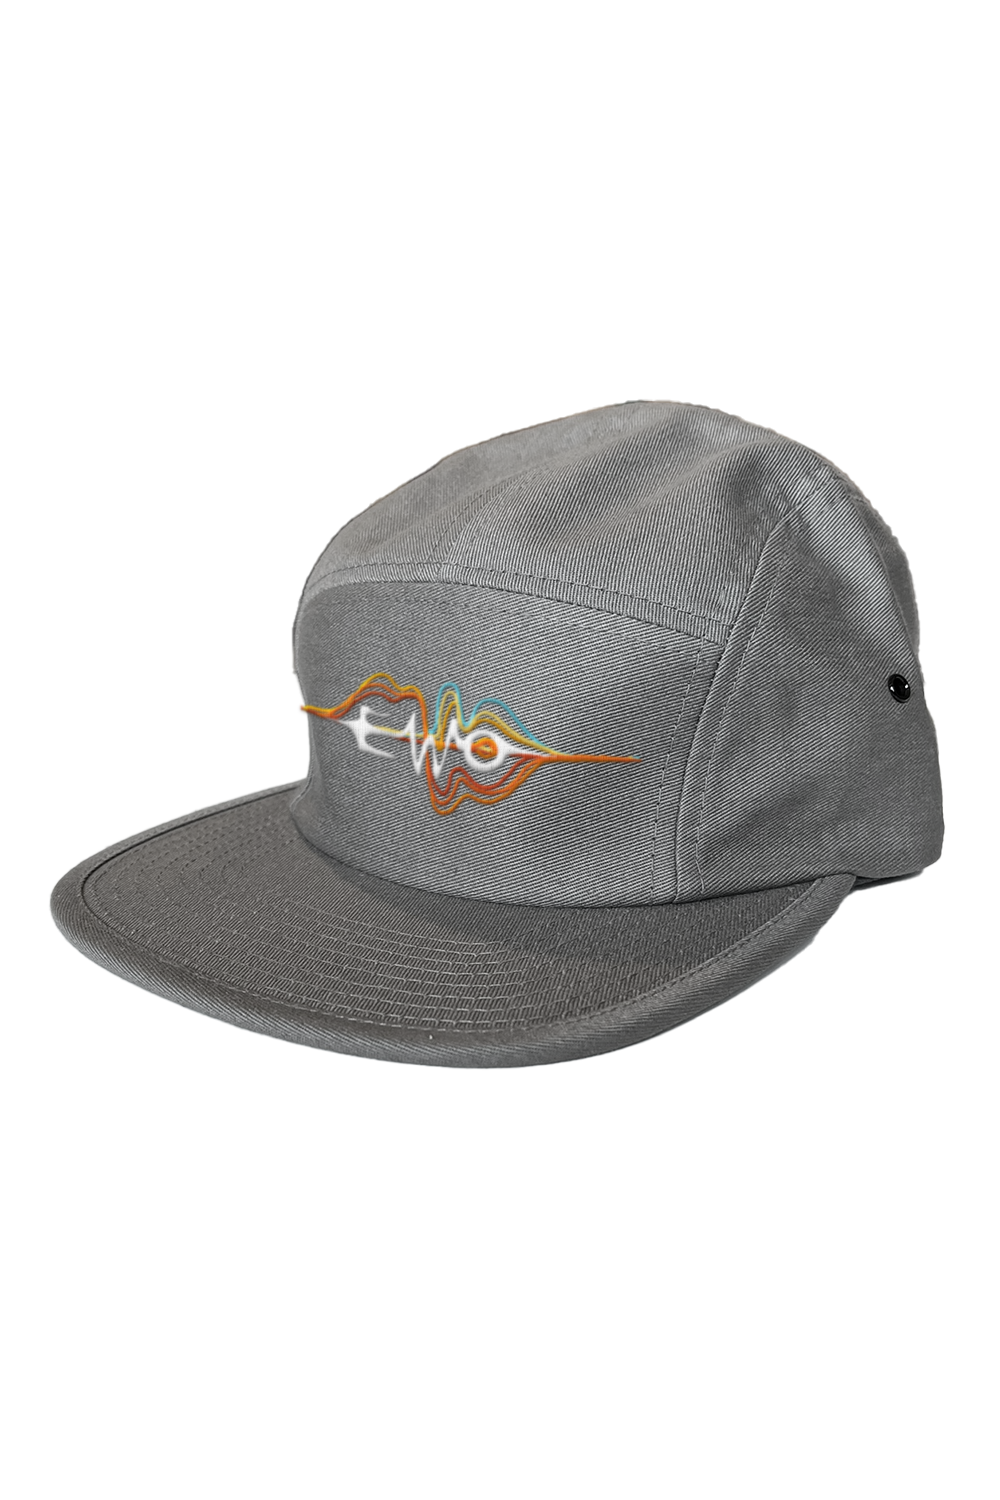 EWO 5 Panel Hat (Steel)